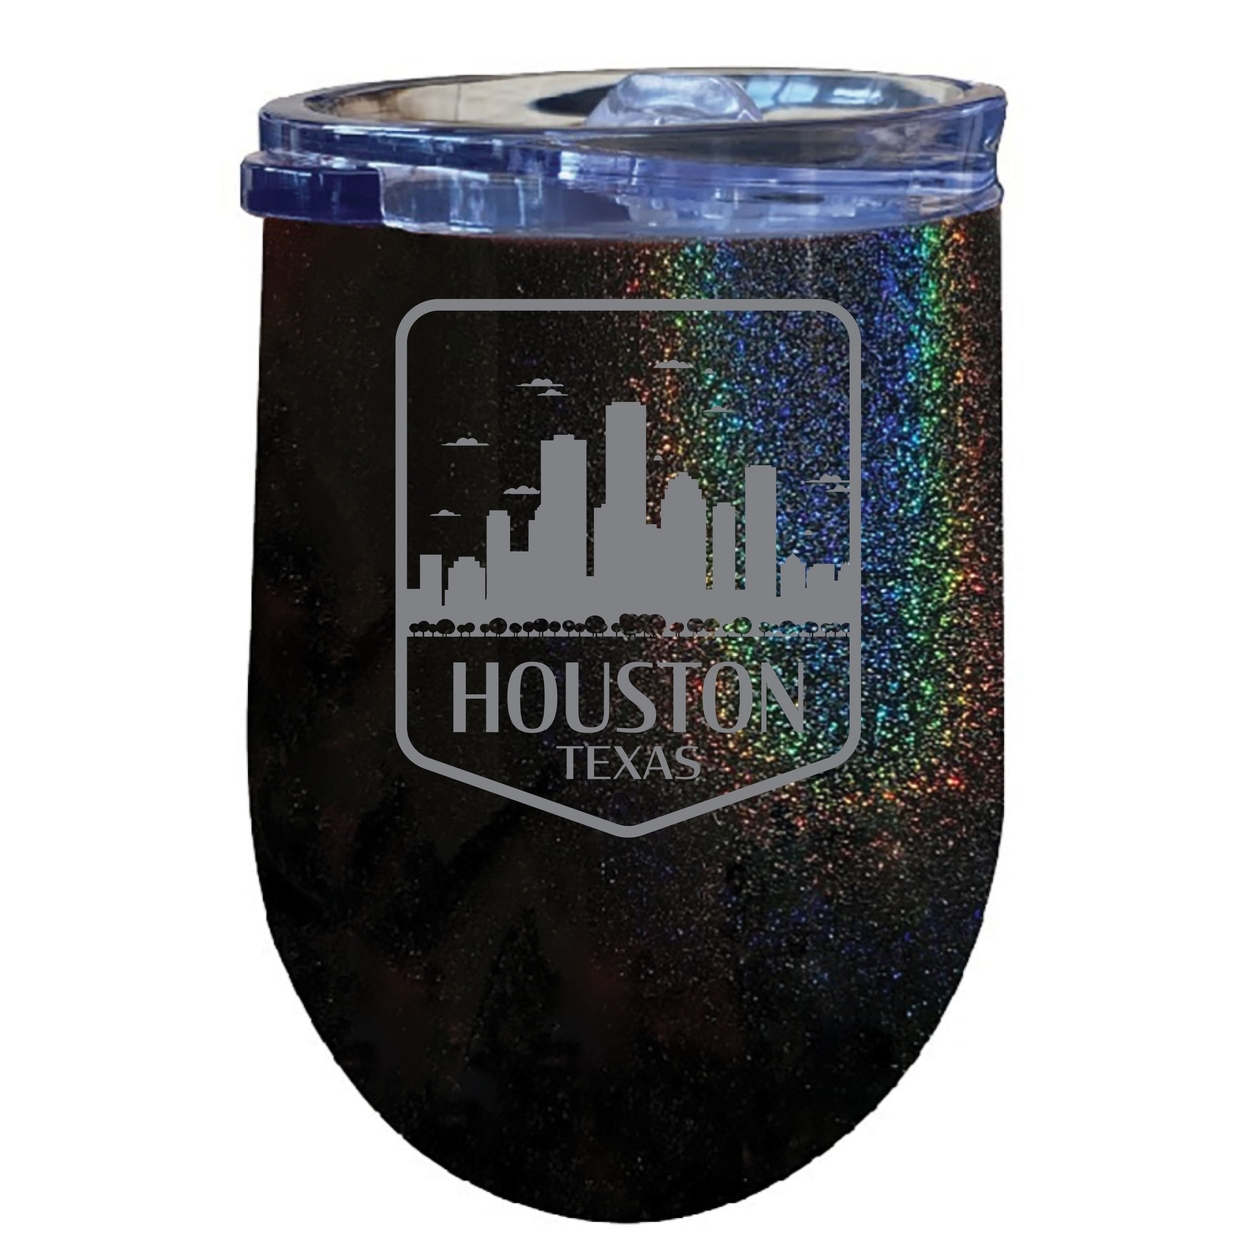 Houston Texas Souvenir 12 Oz Engraved Insulated Wine Stainless Steel Tumbler - Purple,,Single Unit